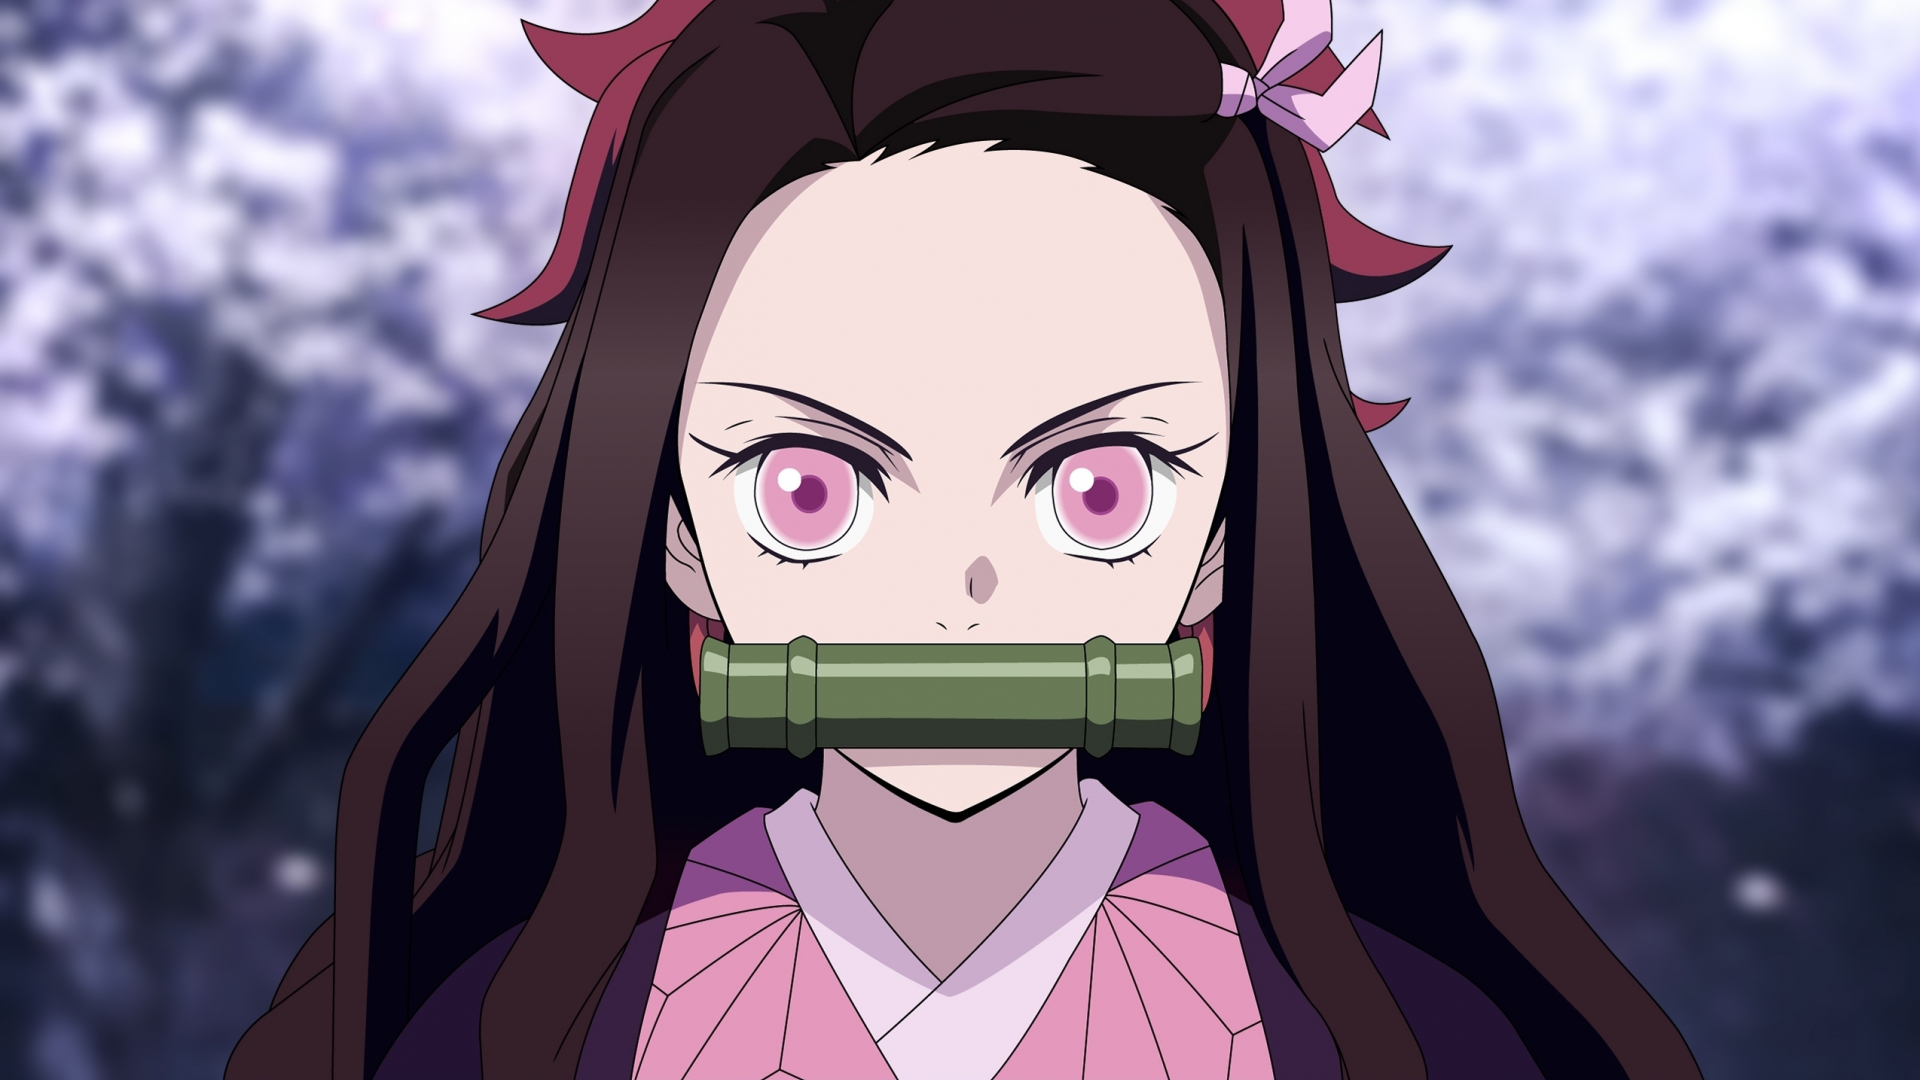 Download 1920x1080 wallpaper angry kamado nezuko, pink eyes, anime girl, full hd, hdtv, fhd, 1080p, 1920x1080 HD image, background, 23985